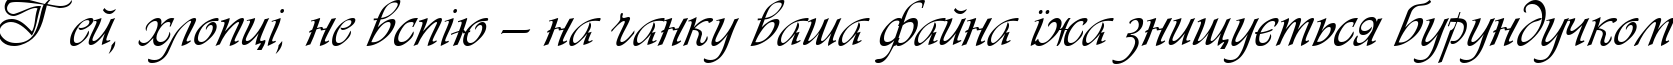 Пример написания шрифтом VivaldiD CL текста на украинском